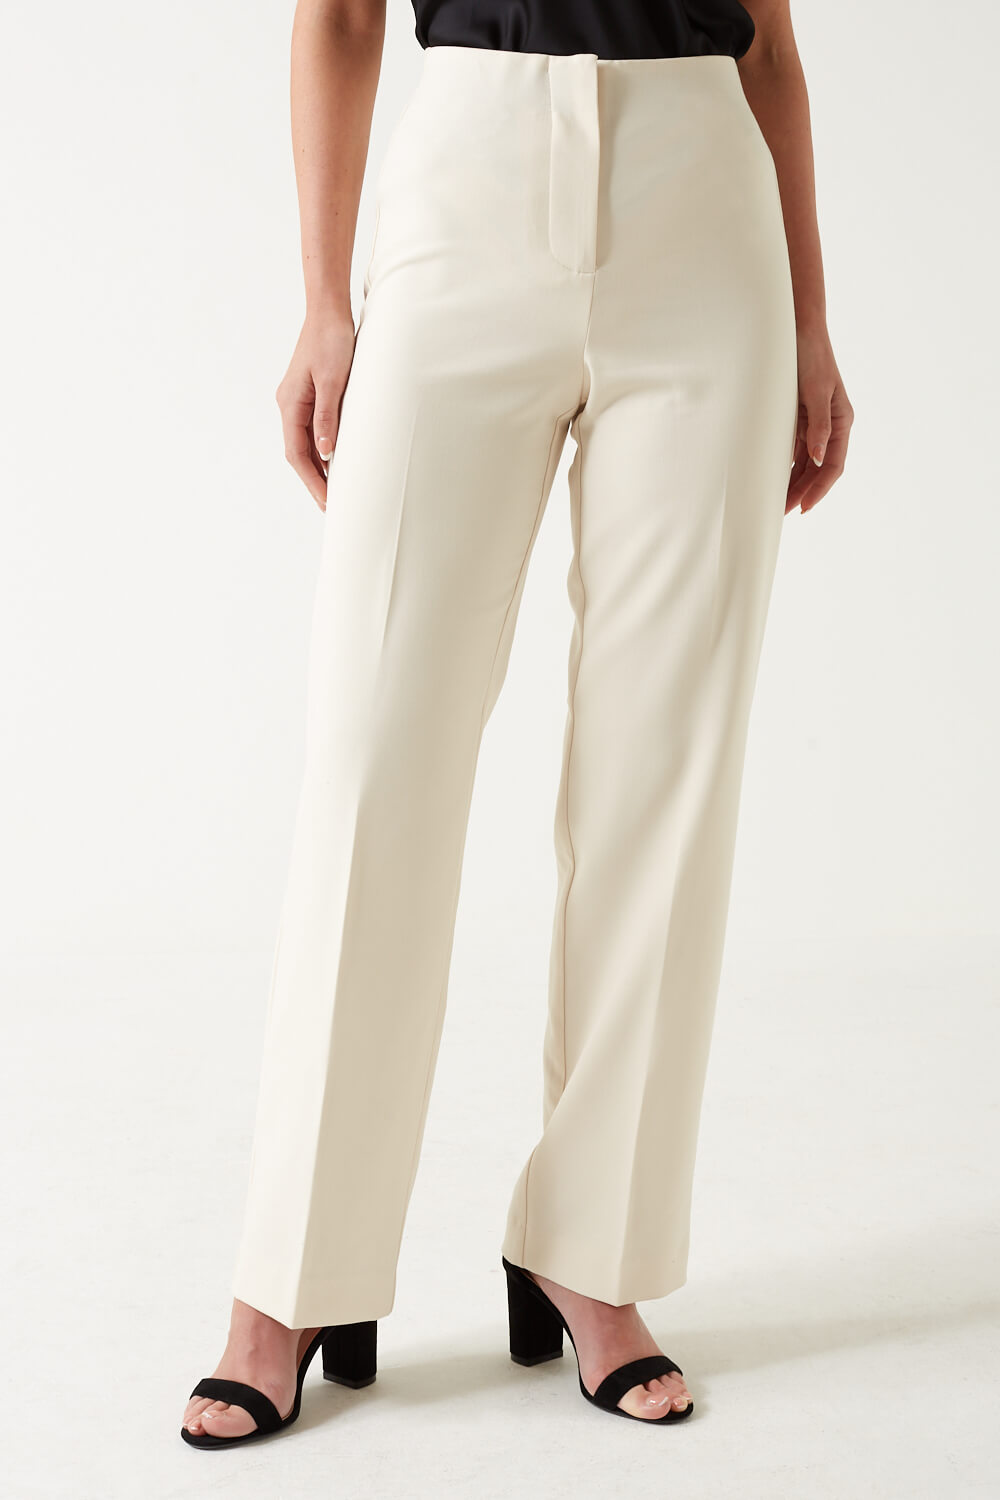 Buy Cream Trousers & Pants for Women by Sateen Online | Ajio.com